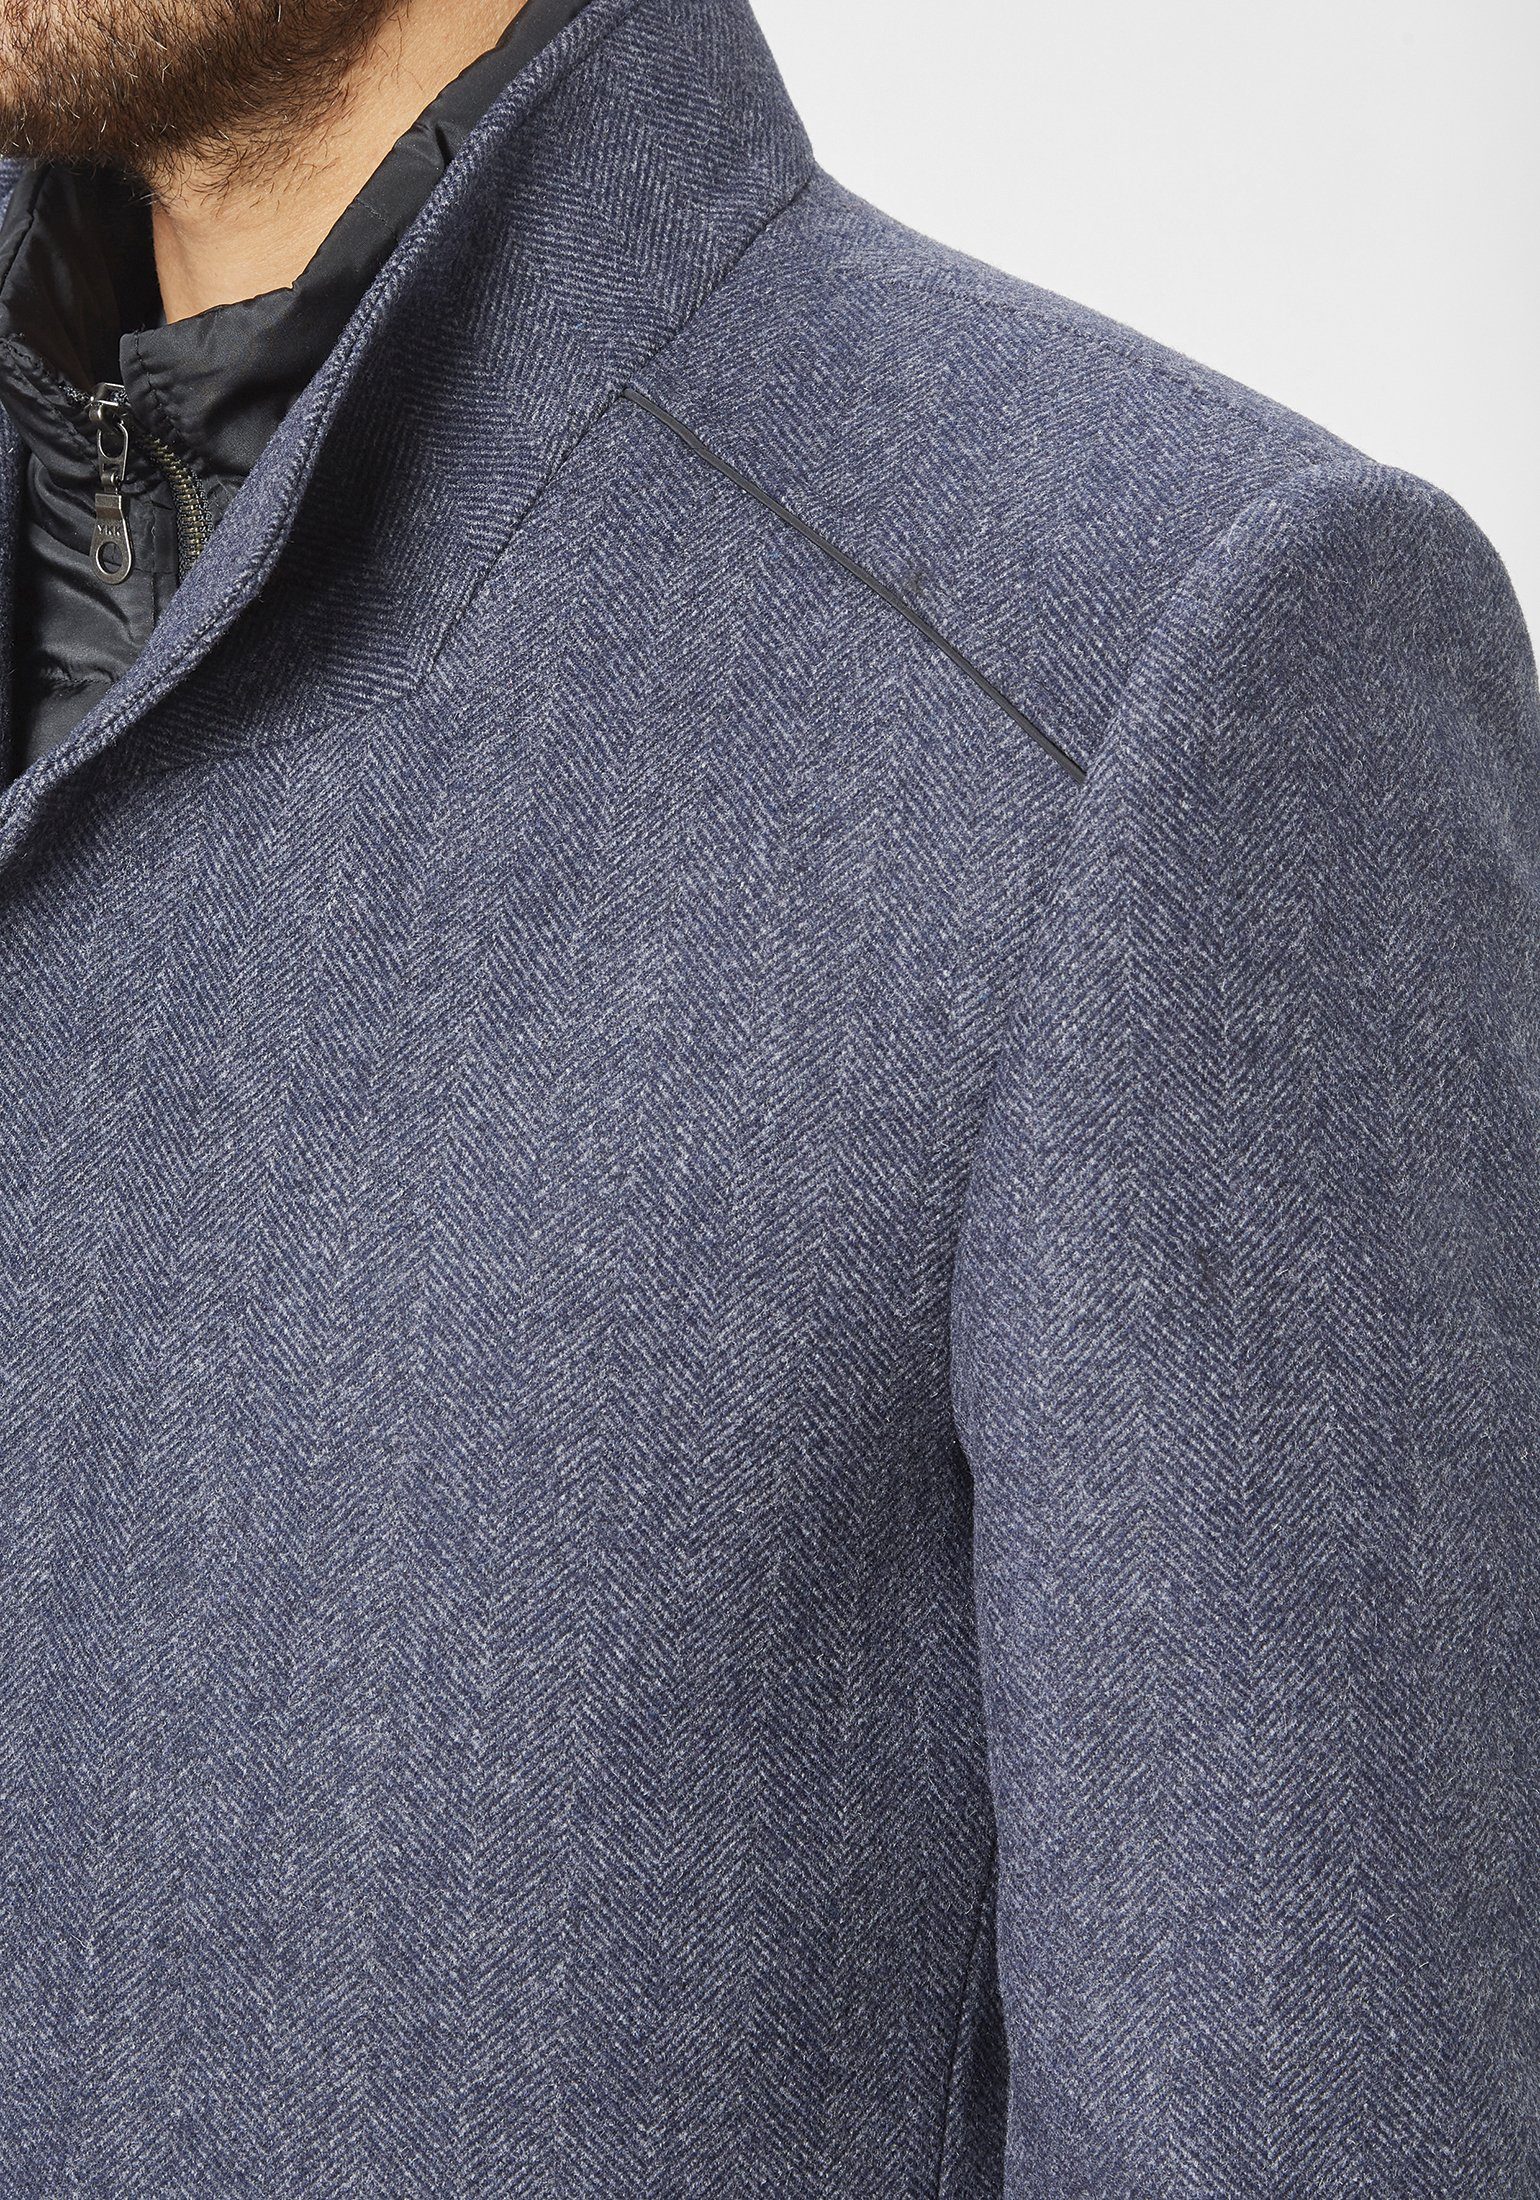 grey/anthra Wollmantel Newton S4 Jackets Mantel moderner L